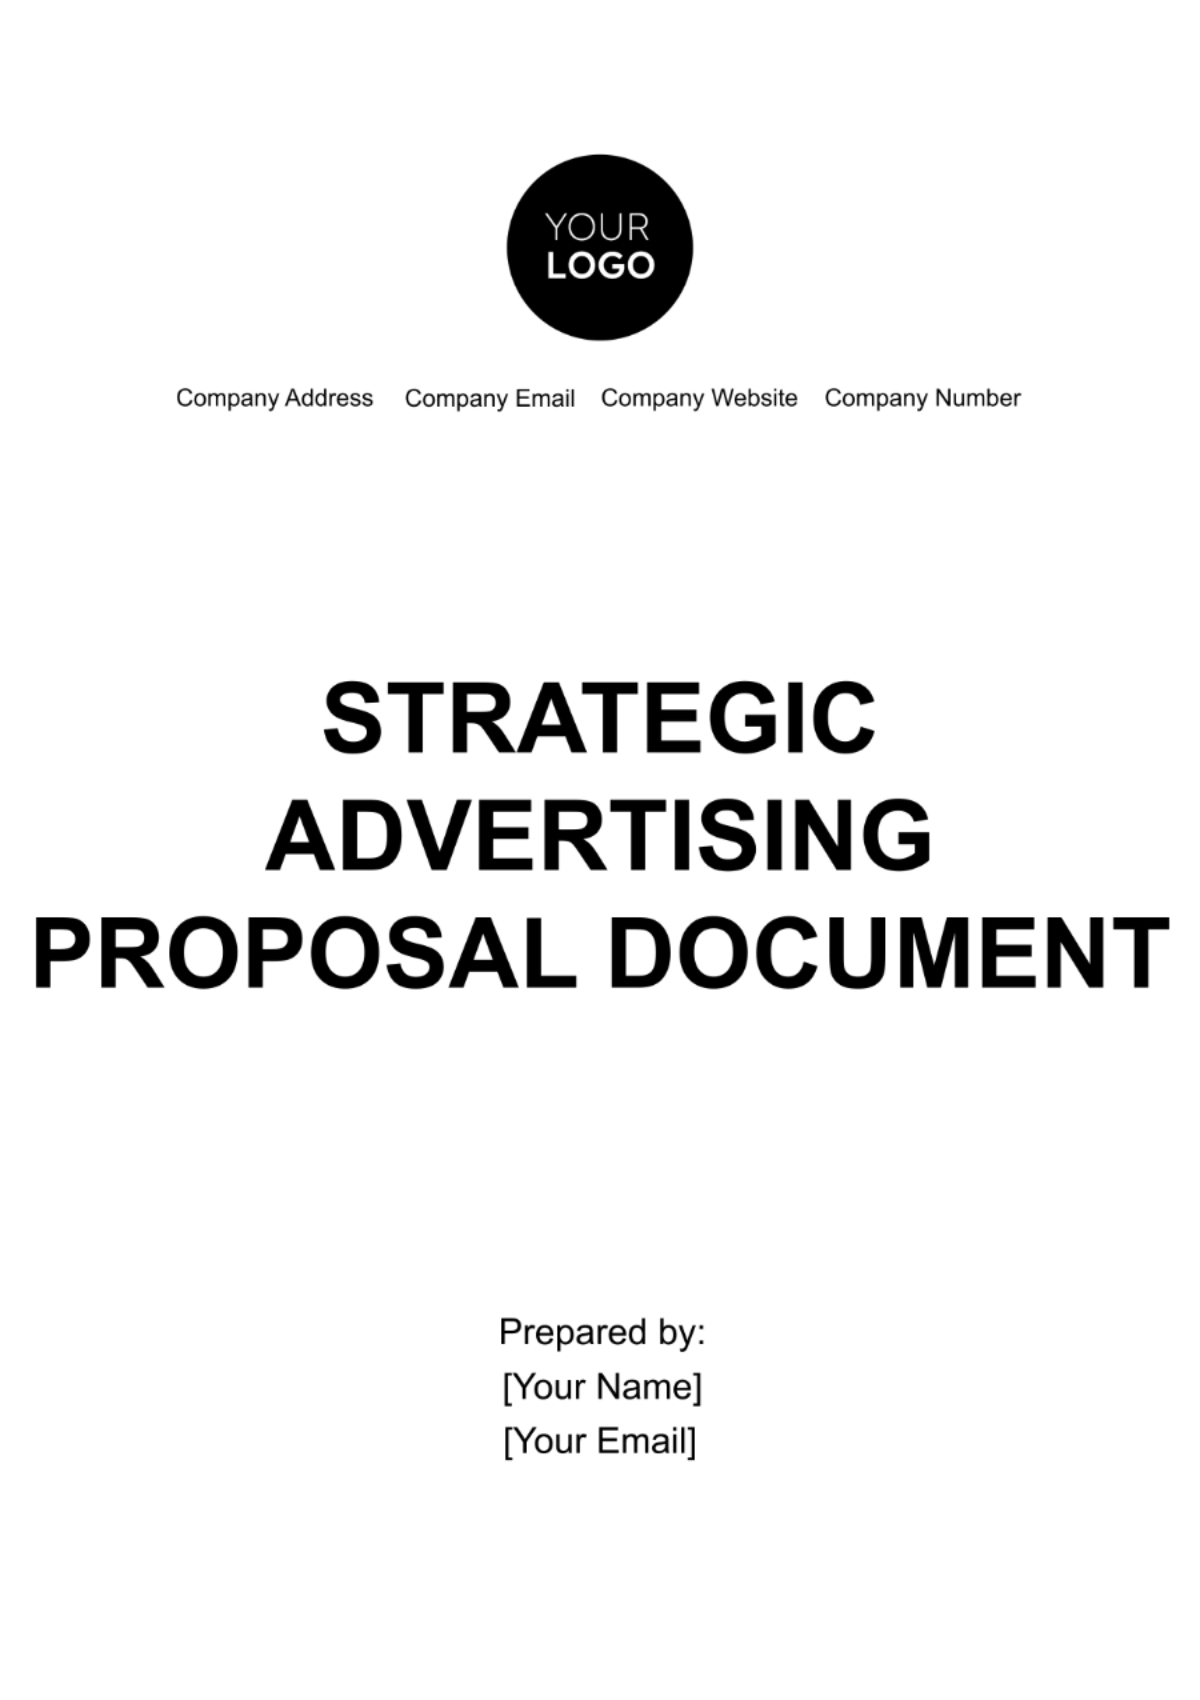 Strategic Advertising Proposal Document Template